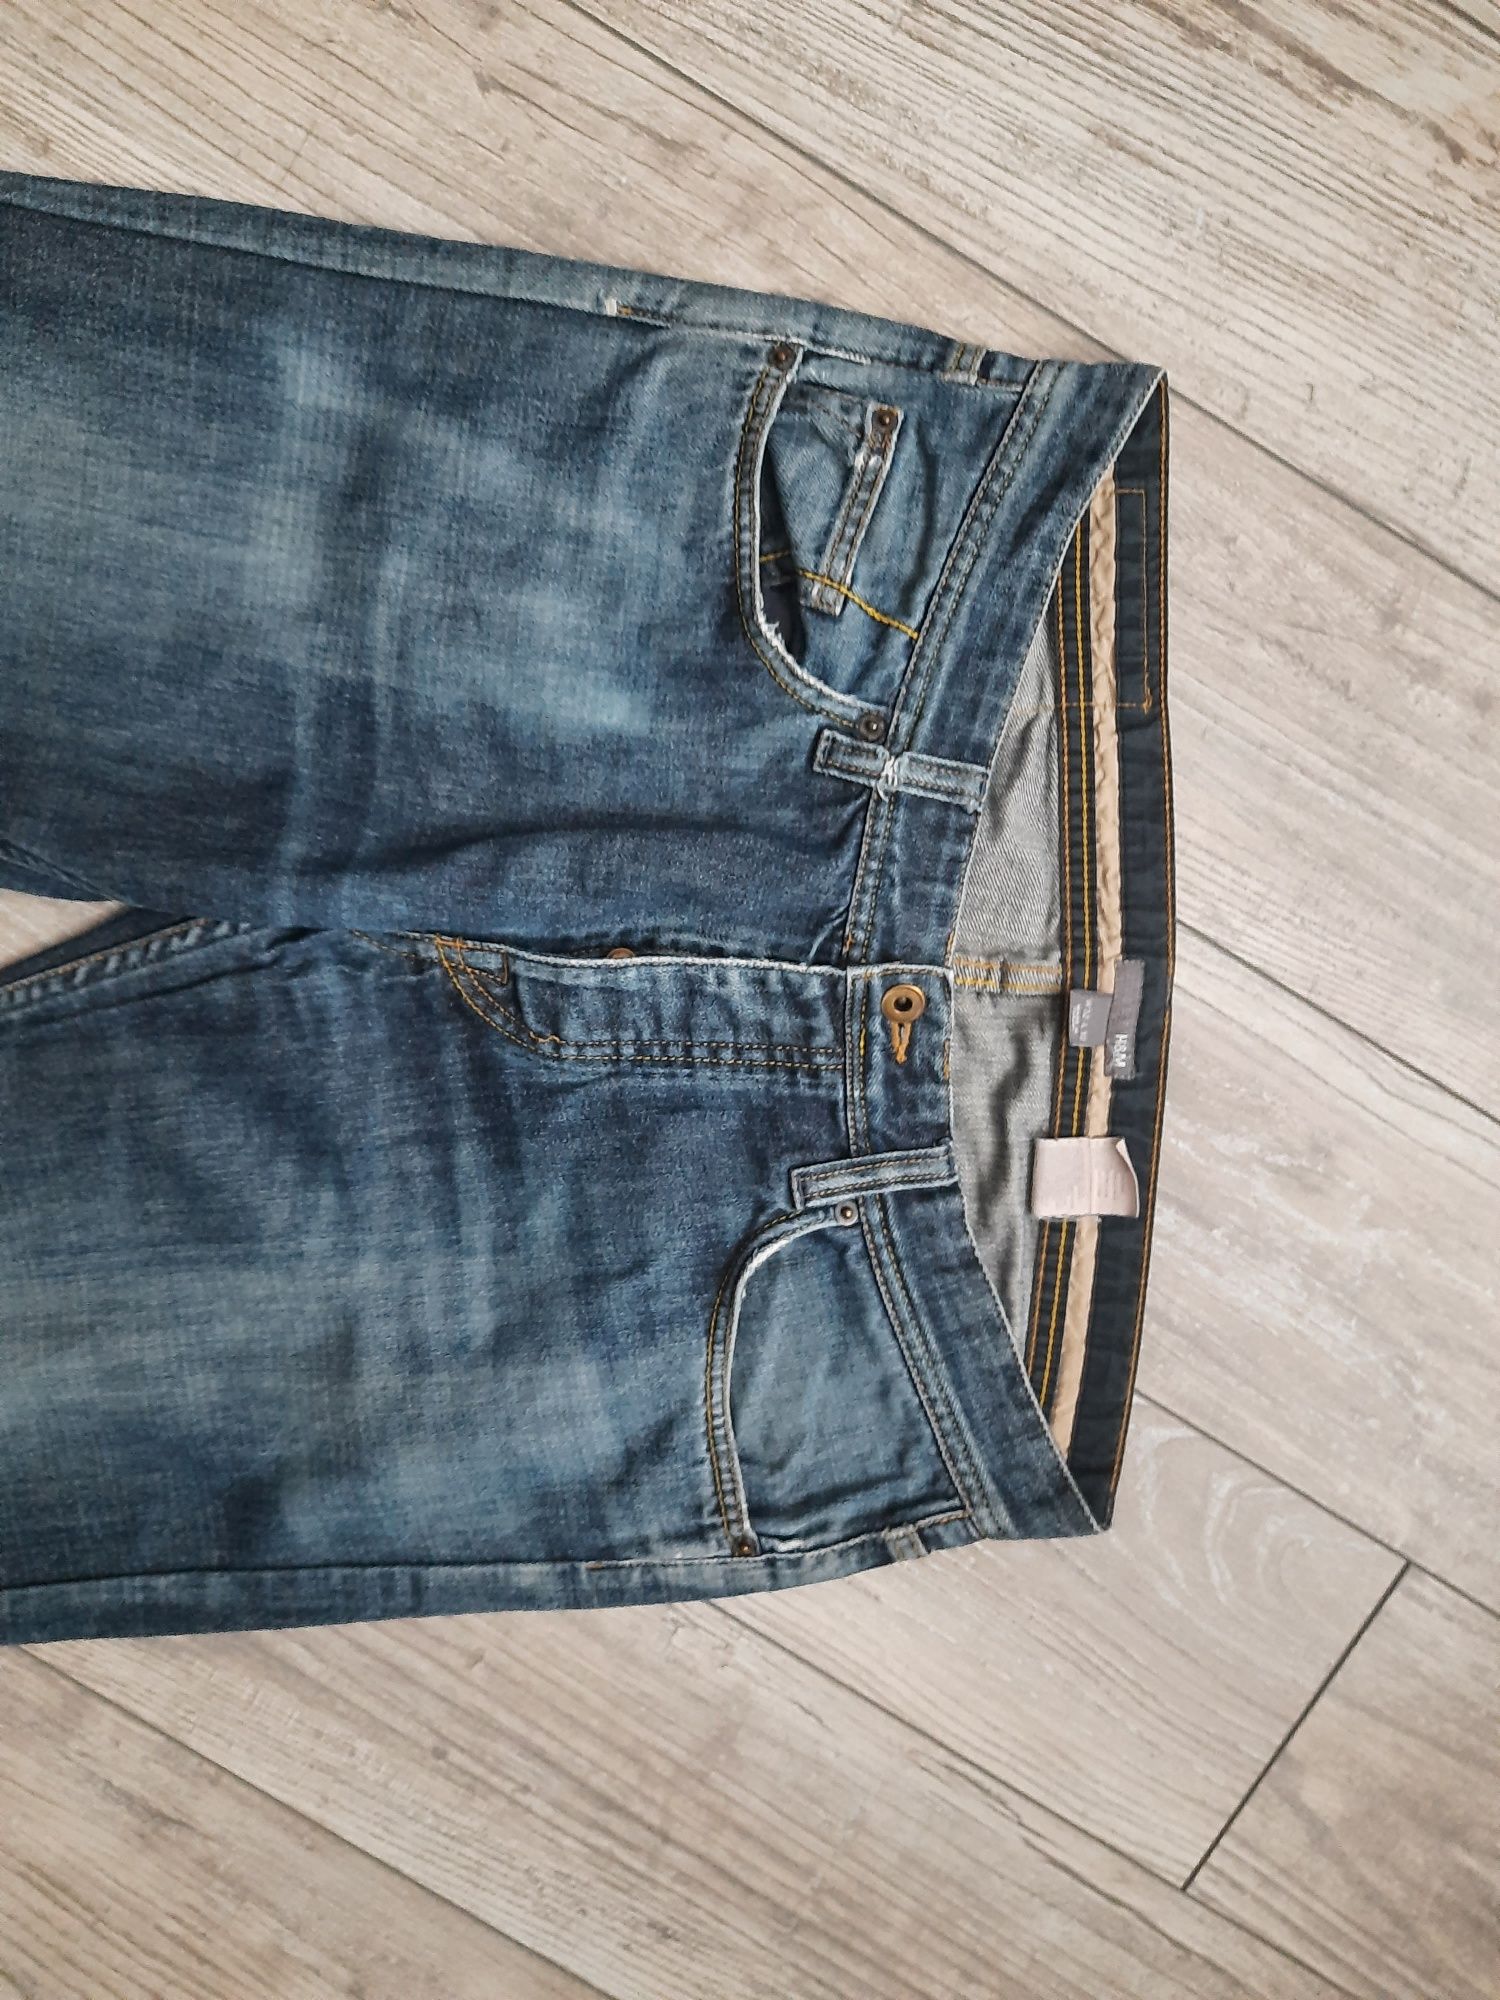 Jeansy dżinsy H&M 32/32, r. L